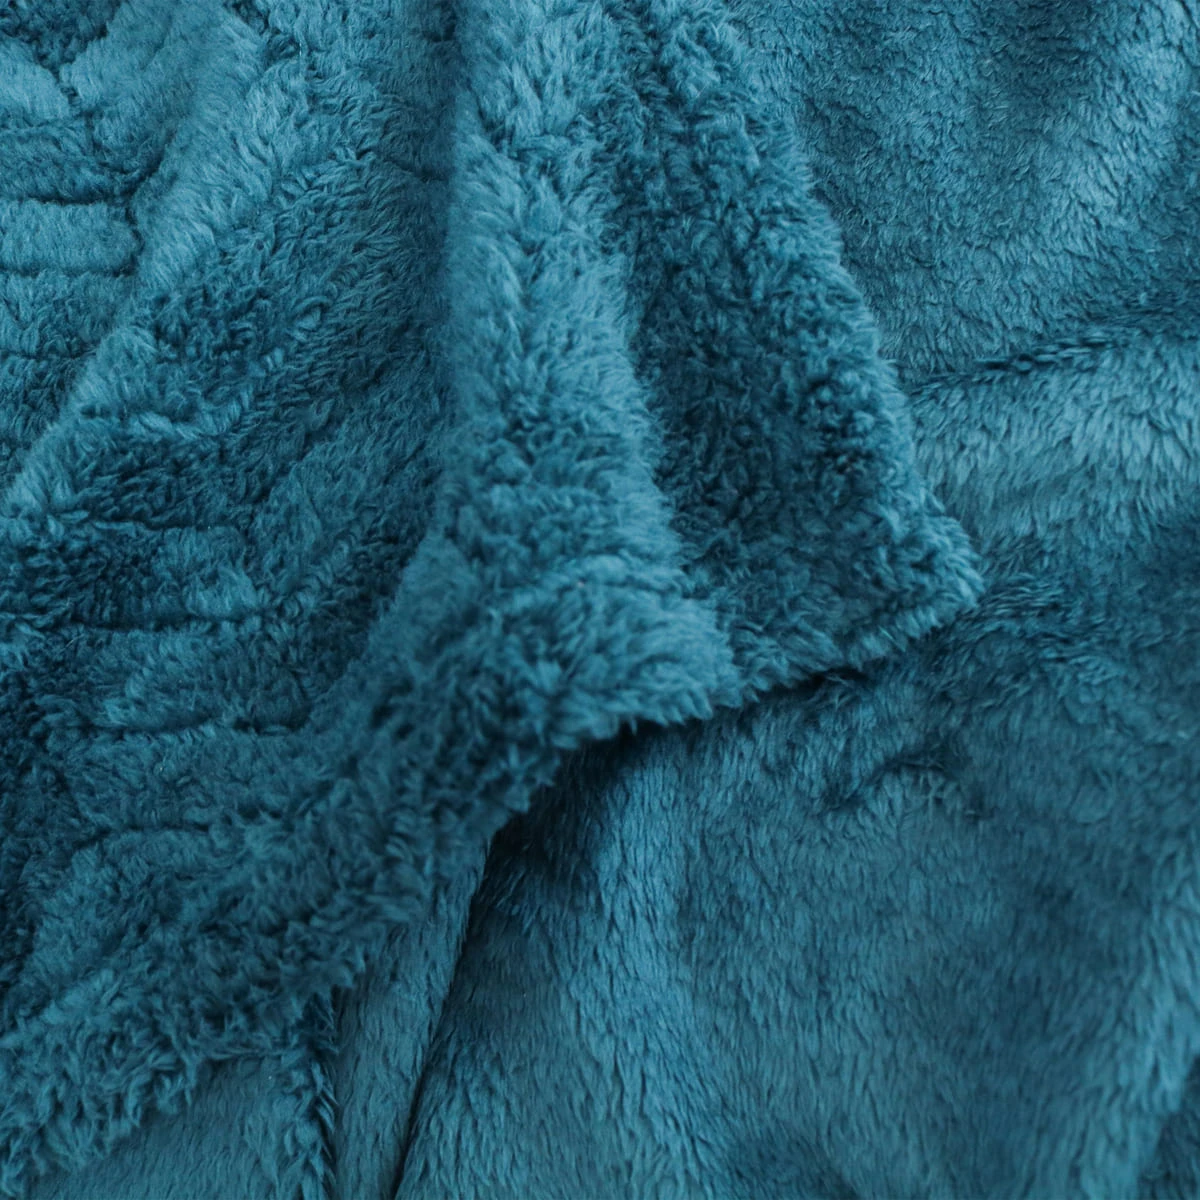 3D Chevron Pattern Wombat Plush Blanket (Dark Green)